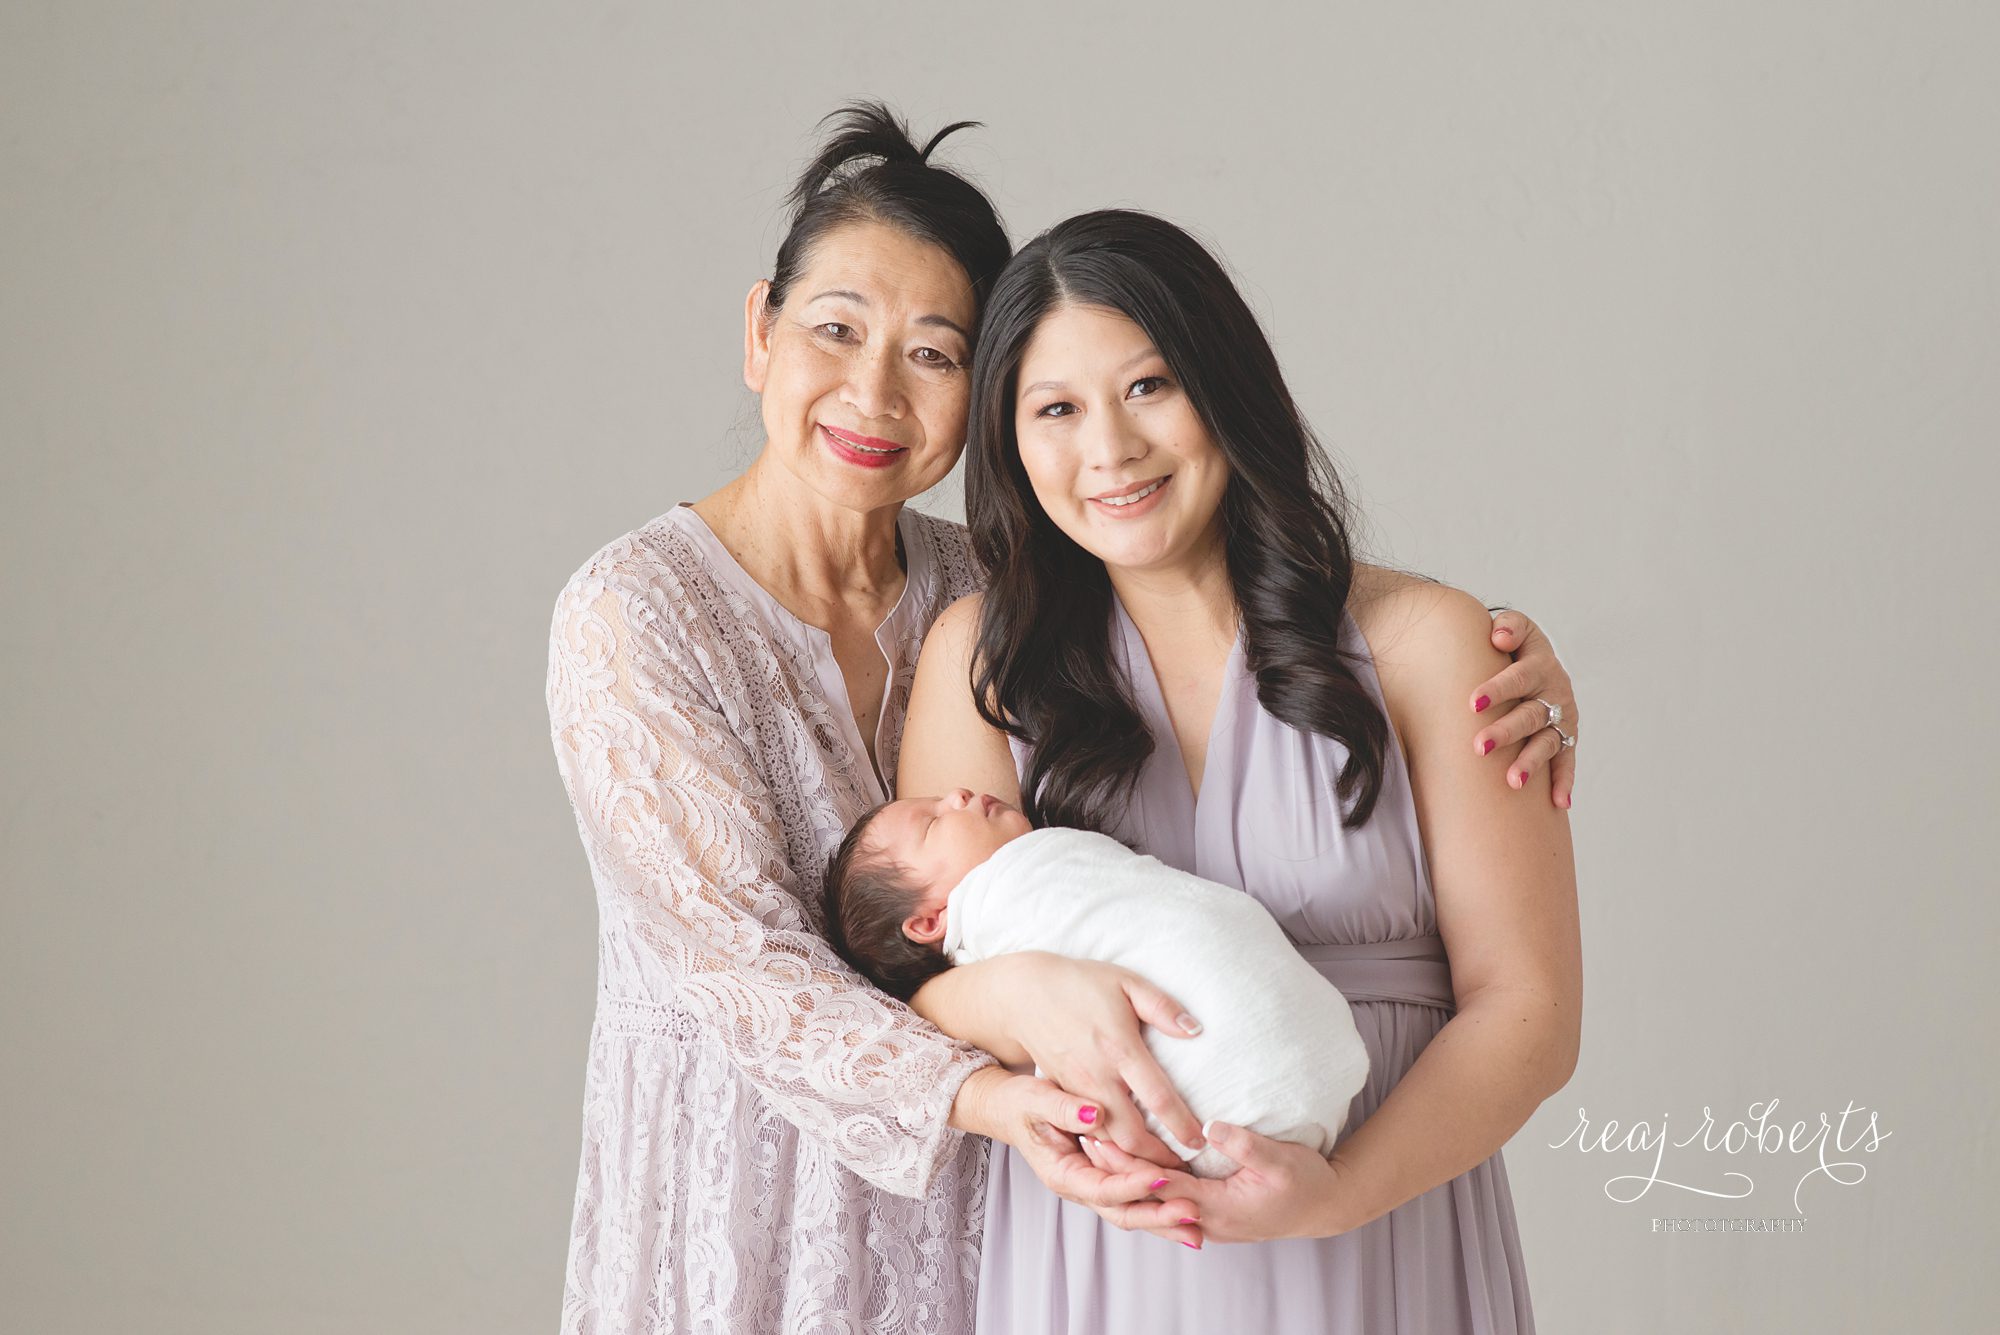 newborn photos with mom and grandma | Reaj Roberts Photography